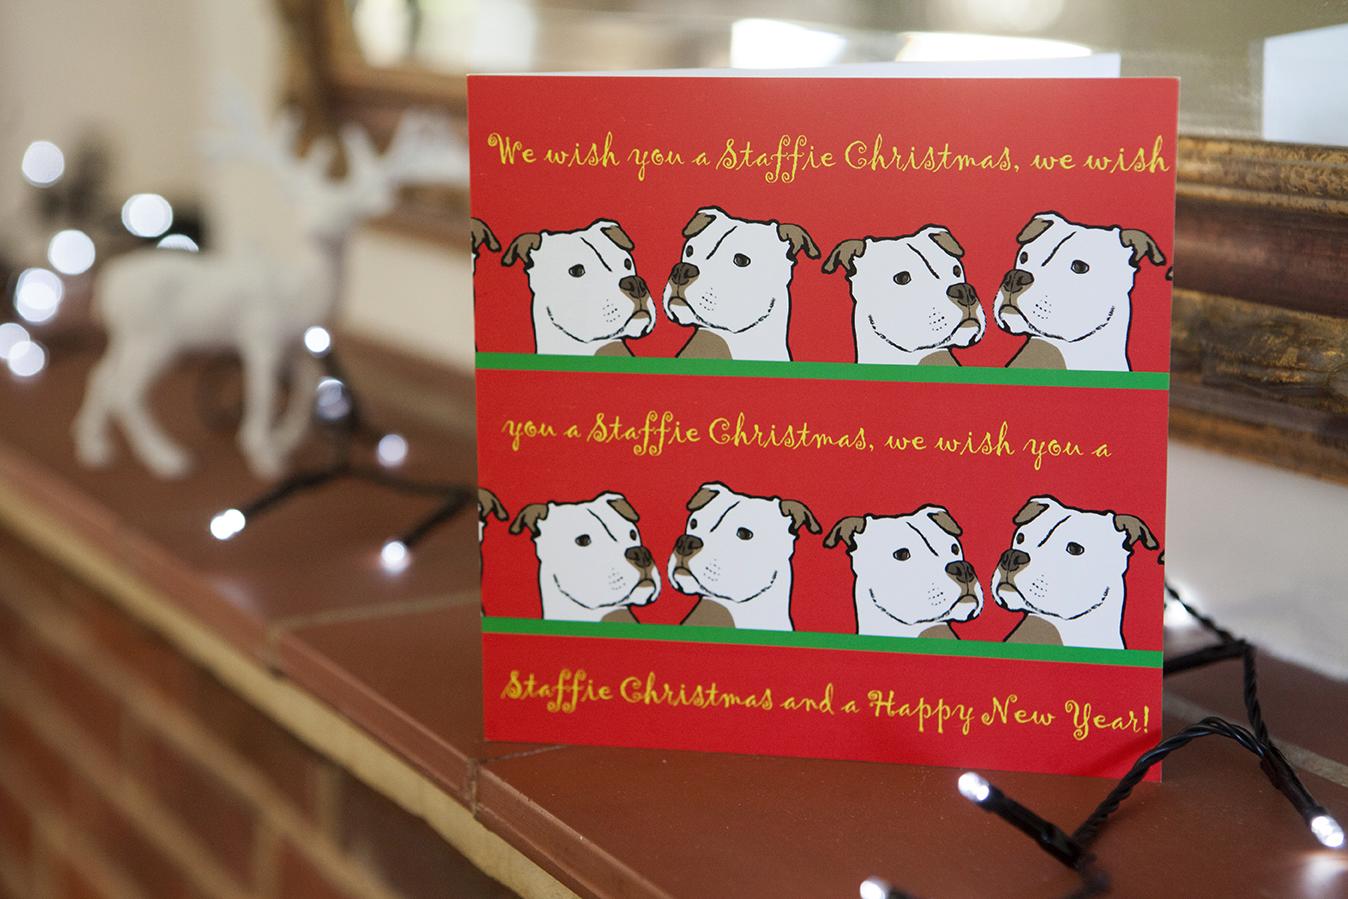 Staffie Christmas Card